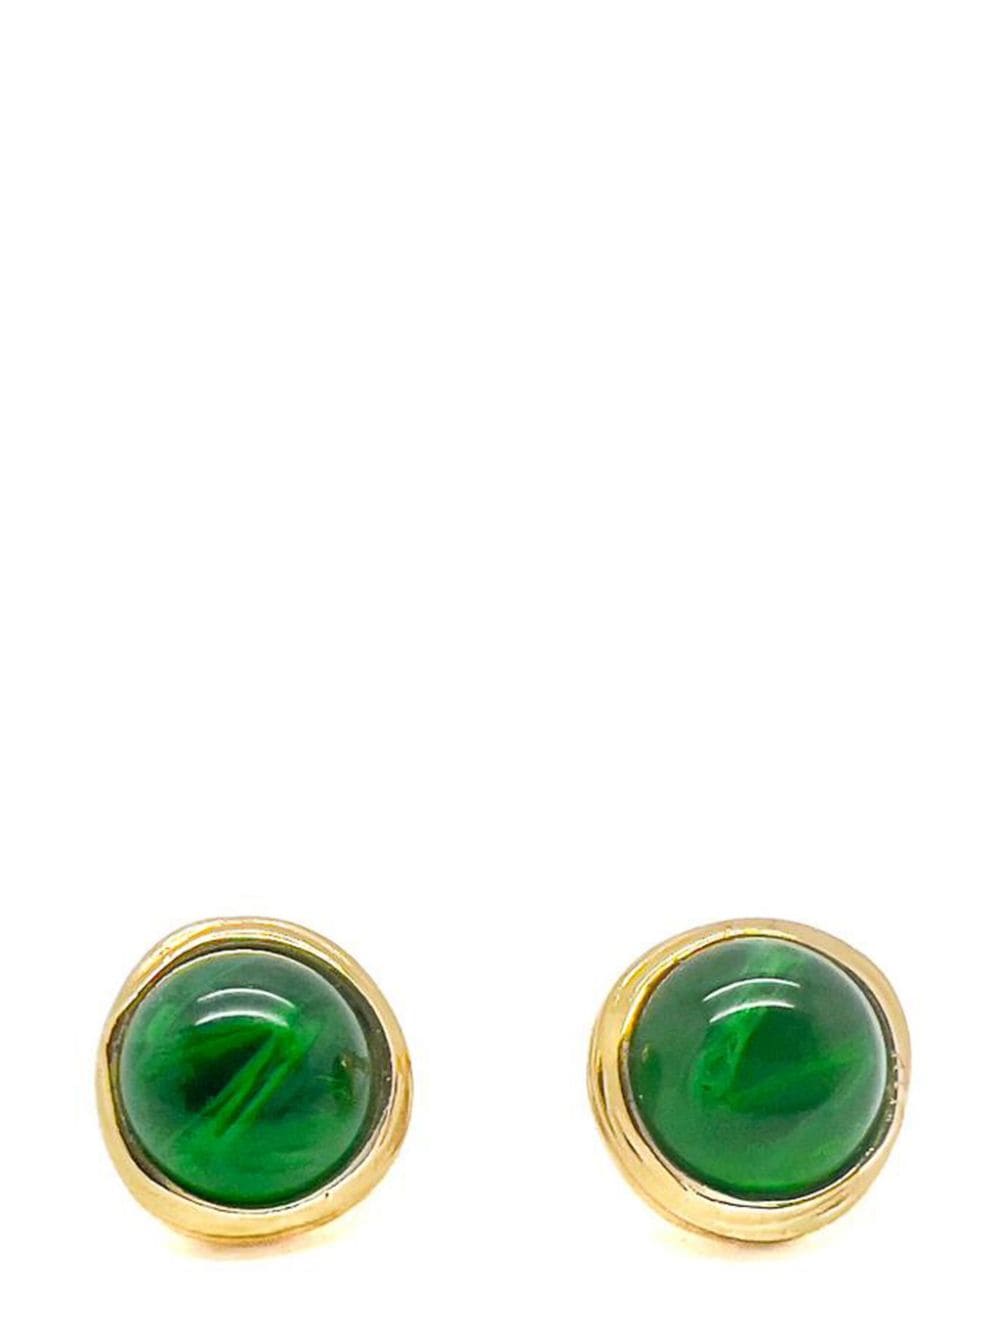 Jennifer Gibson Jewellery Vintage Christian Dior Flawed Emerald Glass Cabochon Earrings 1980s - Green von Jennifer Gibson Jewellery